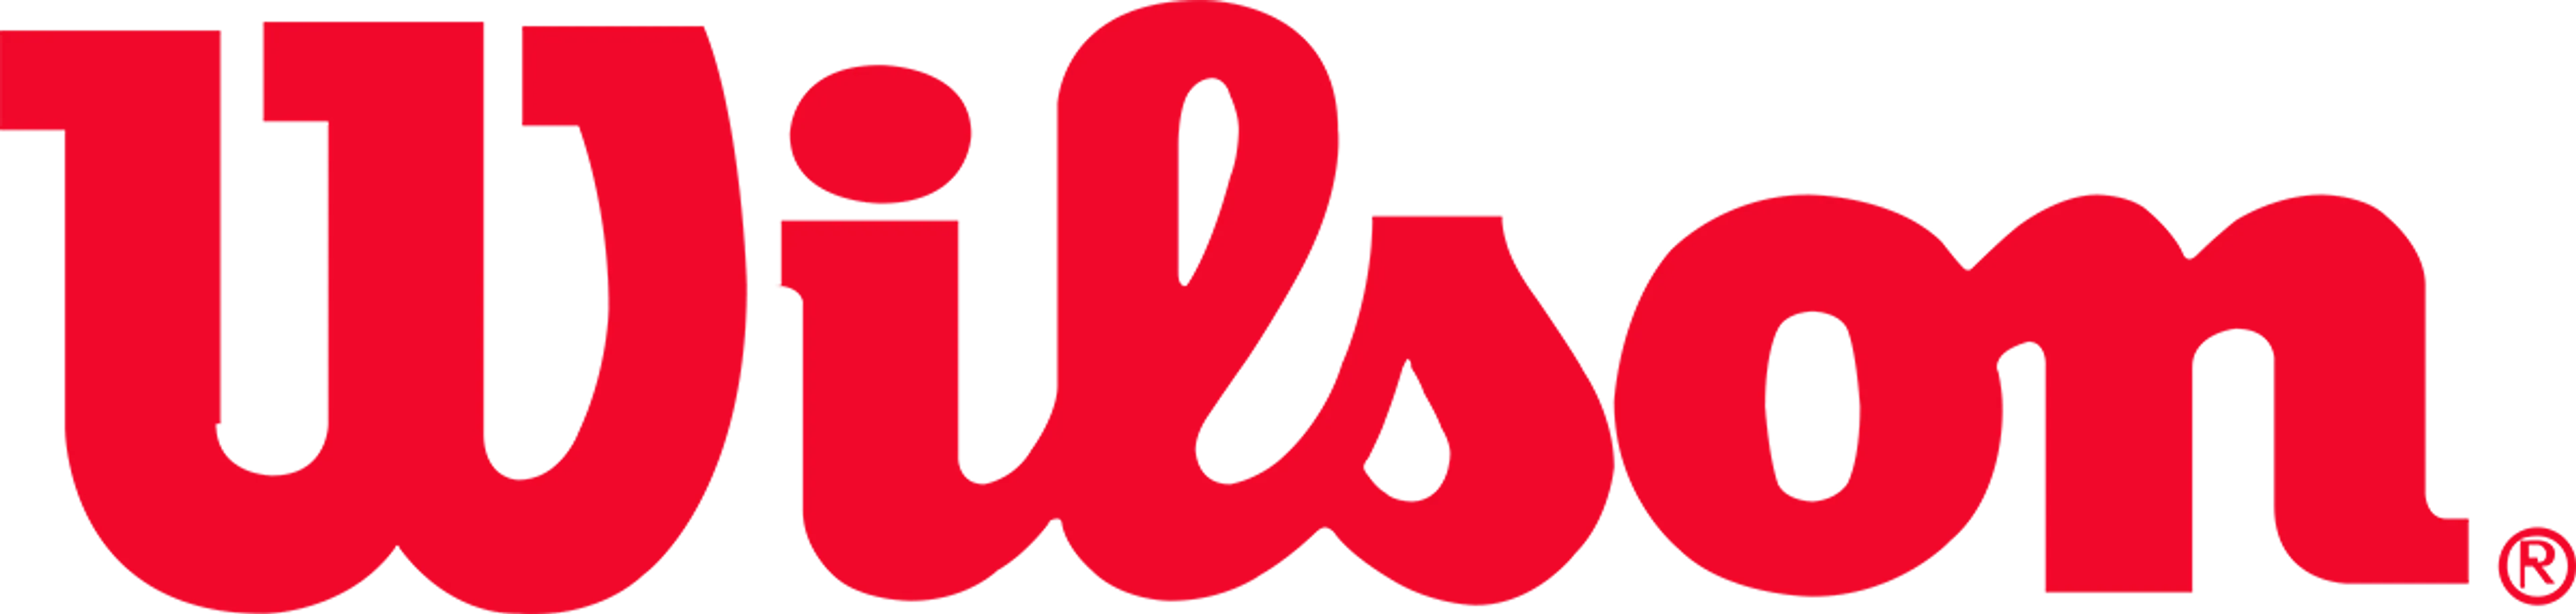 WILSON logo